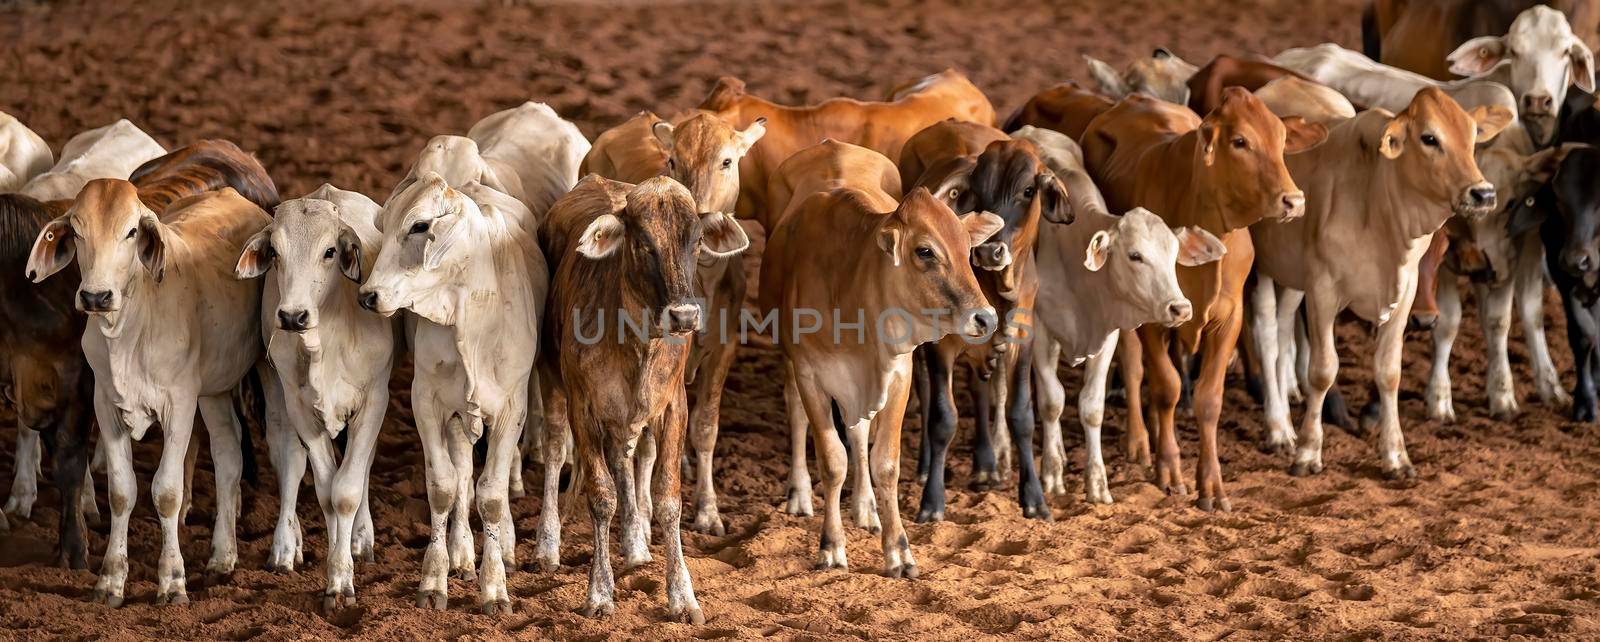 Herd Of Calves In Rodeo Arena by 	JacksonStock